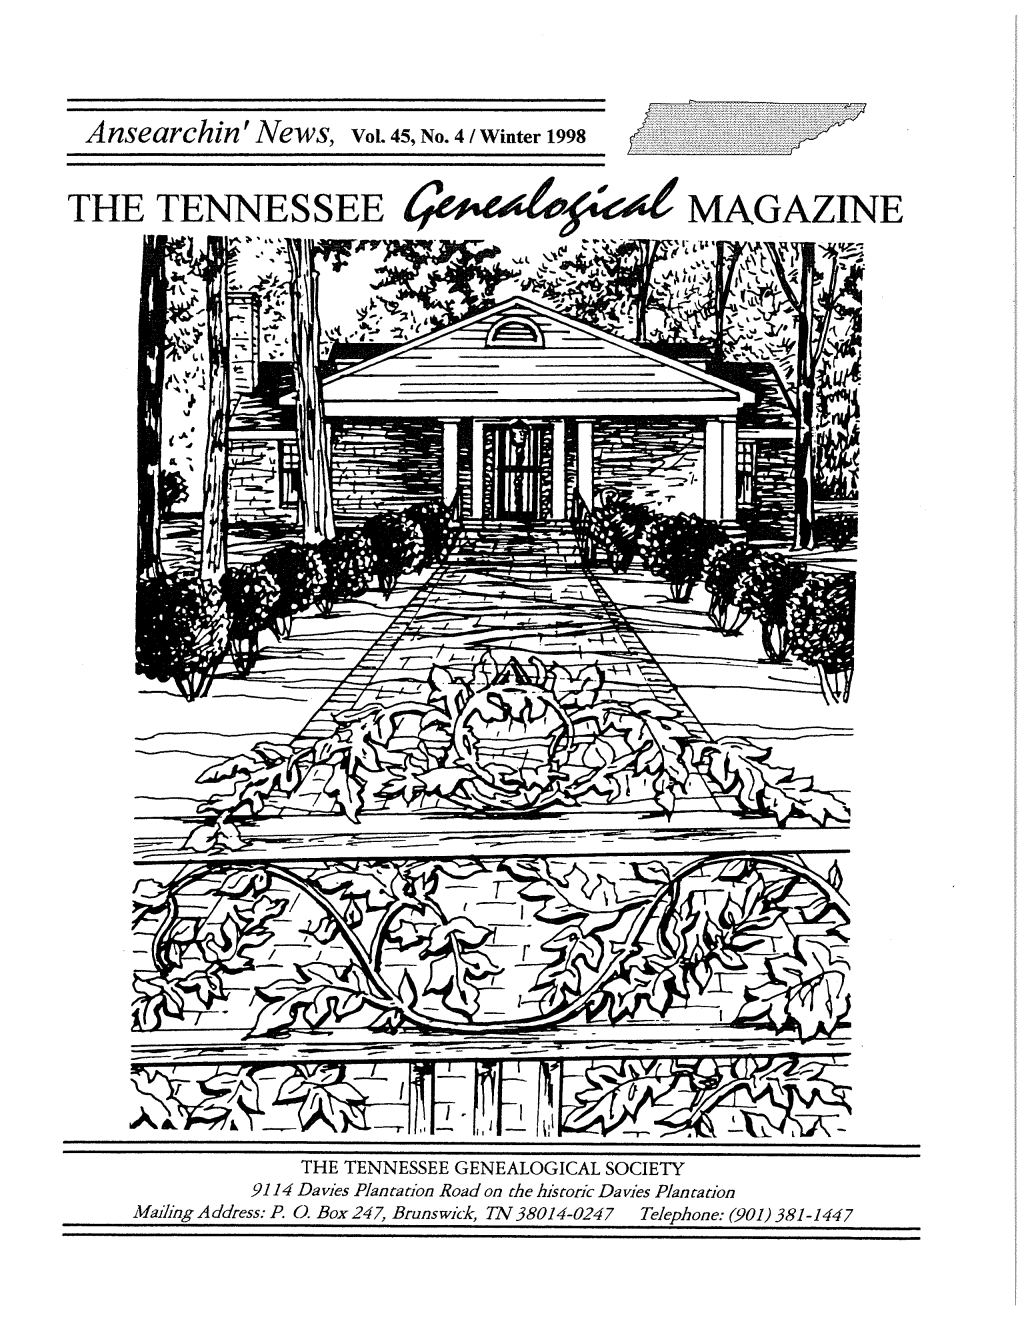 The Tennessee Gazine